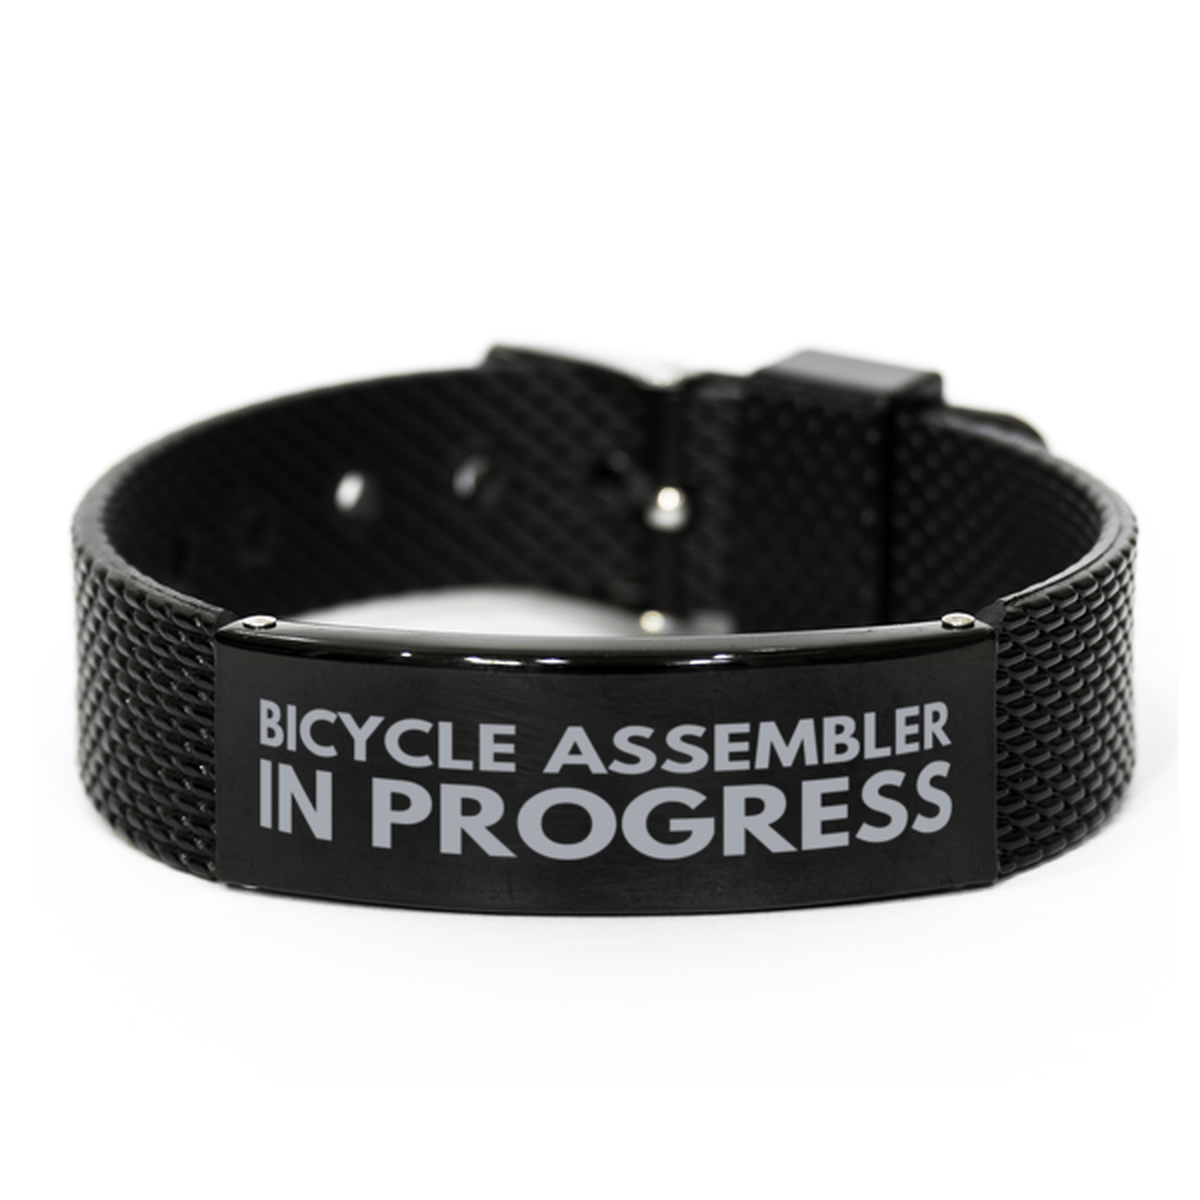 Inspirational Bicycle Assembler Black Shark Mesh Bracelet, Bicycle Assembler In Progress, Best Graduation Gifts for Students